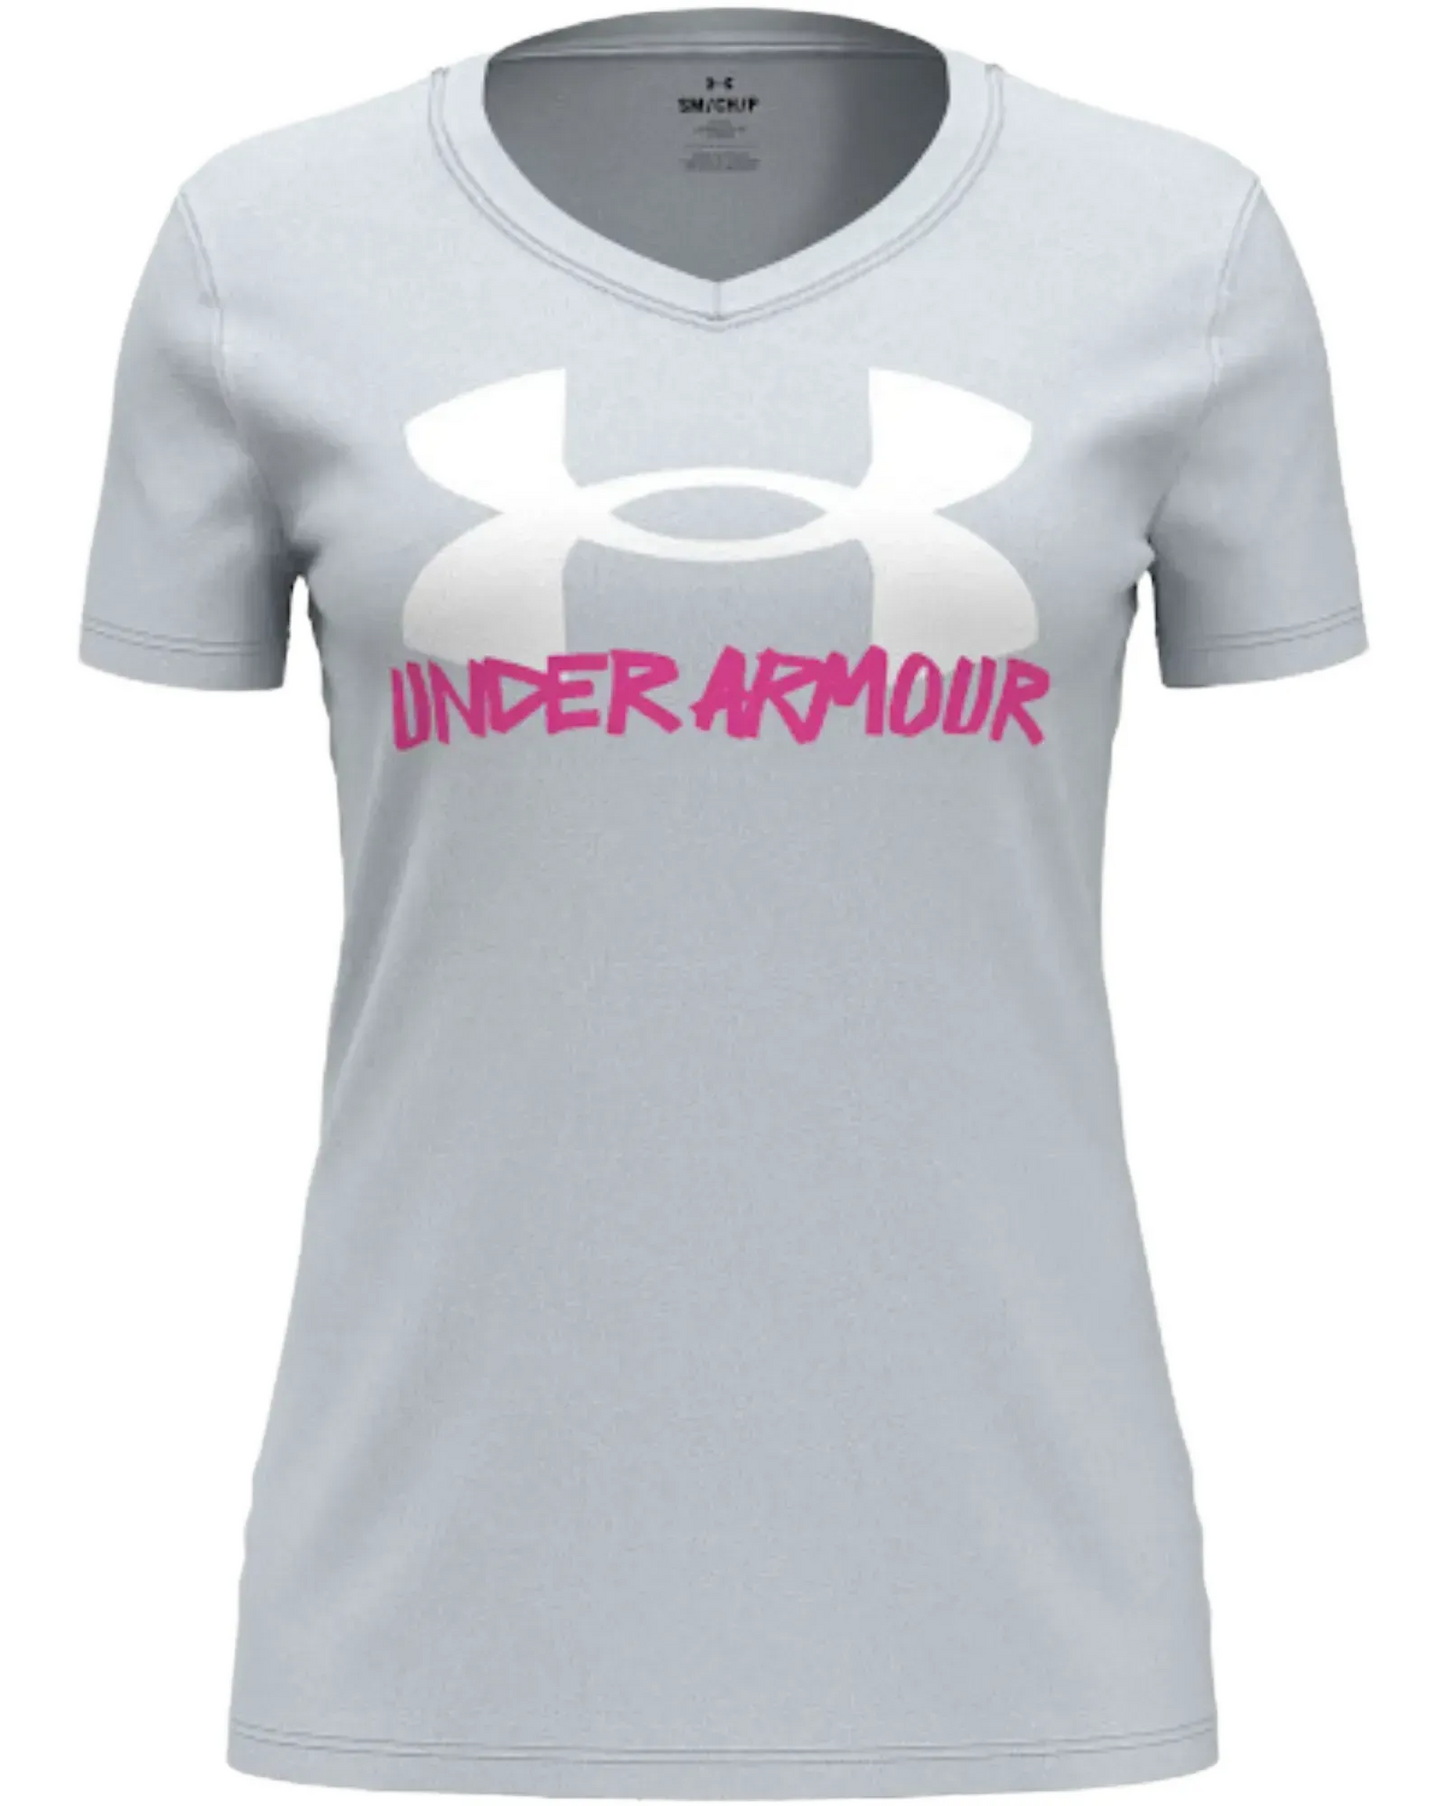 T-shirt - Under Armour